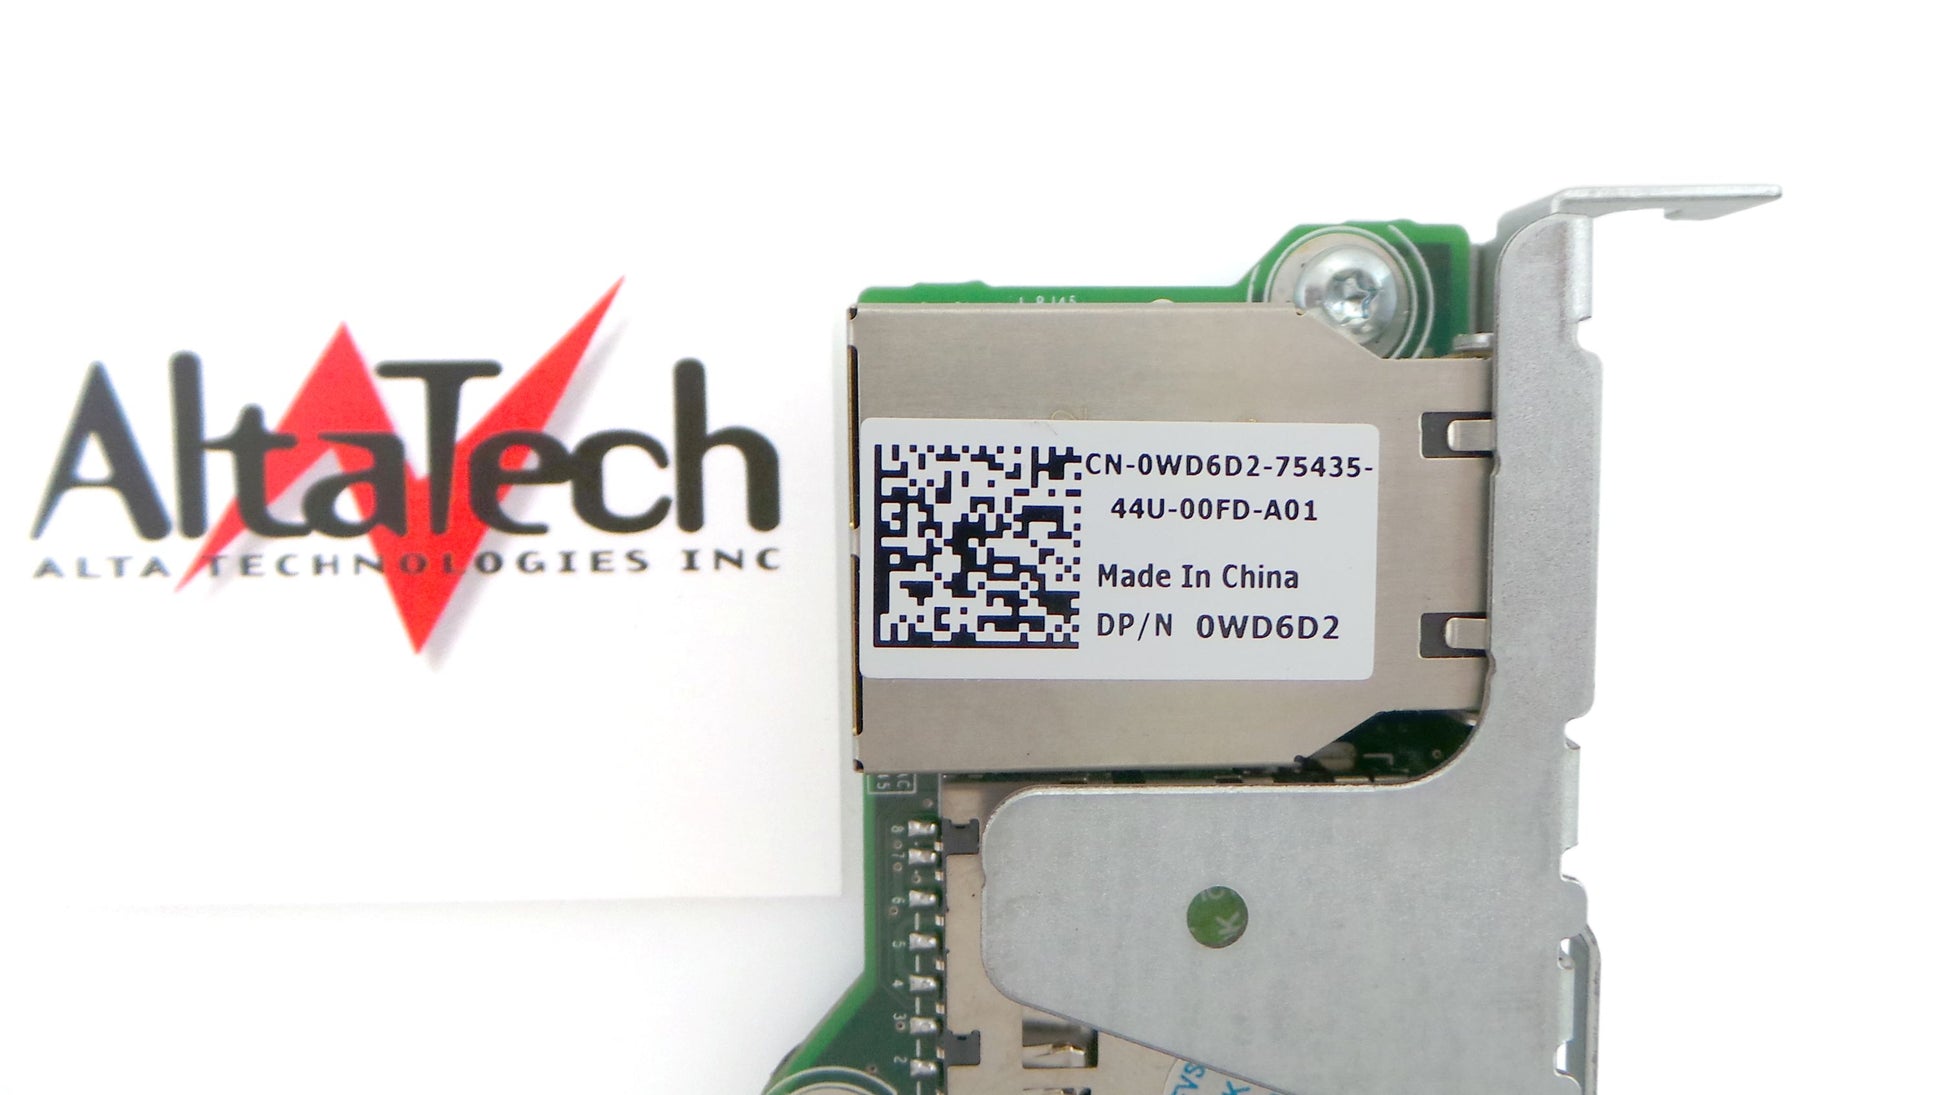 Dell HD71W R320/R420/R520 iDRAC7 Remote Access Card, Used